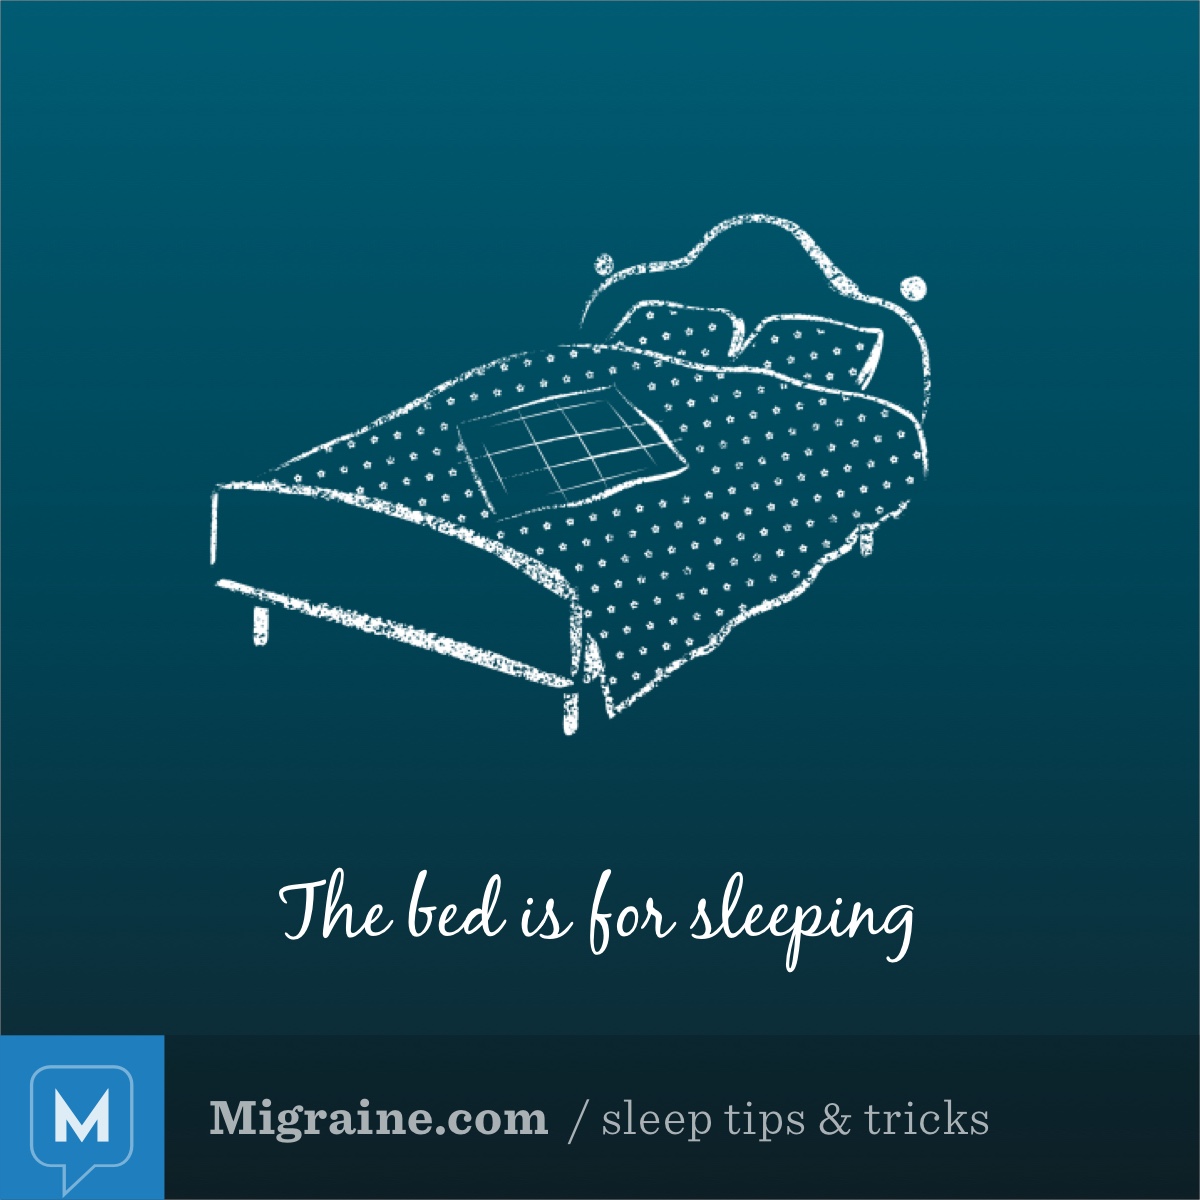 Sleep tips and tricks